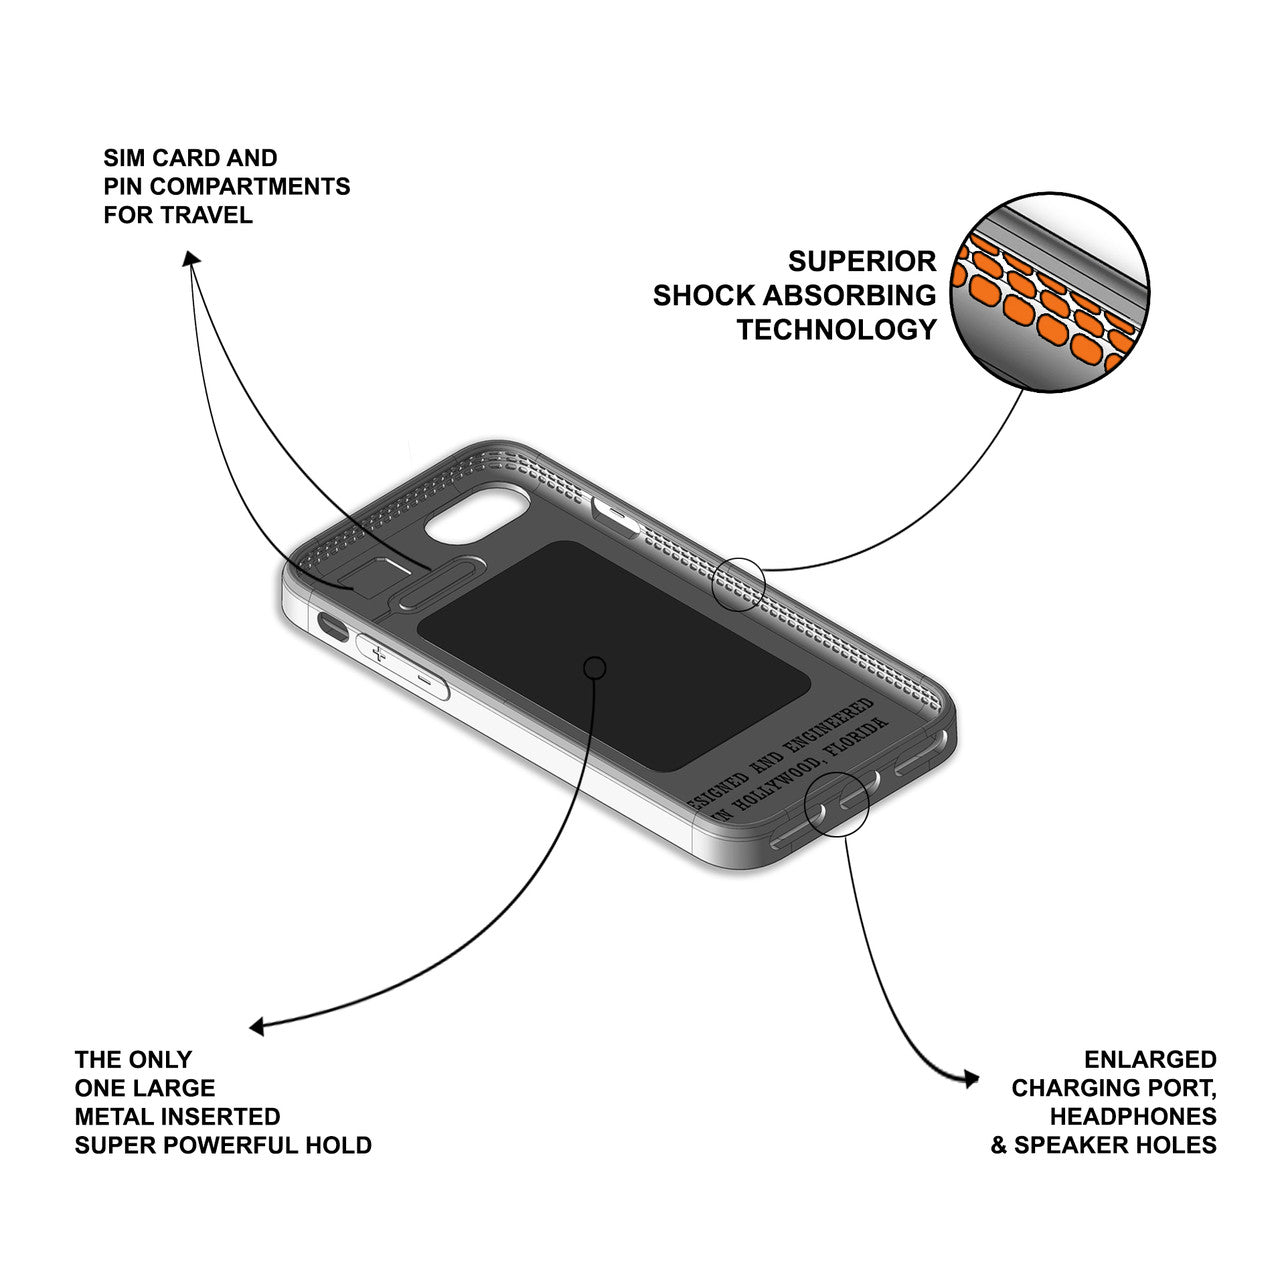 Dream Catcher 3 - Engraved Phone Case